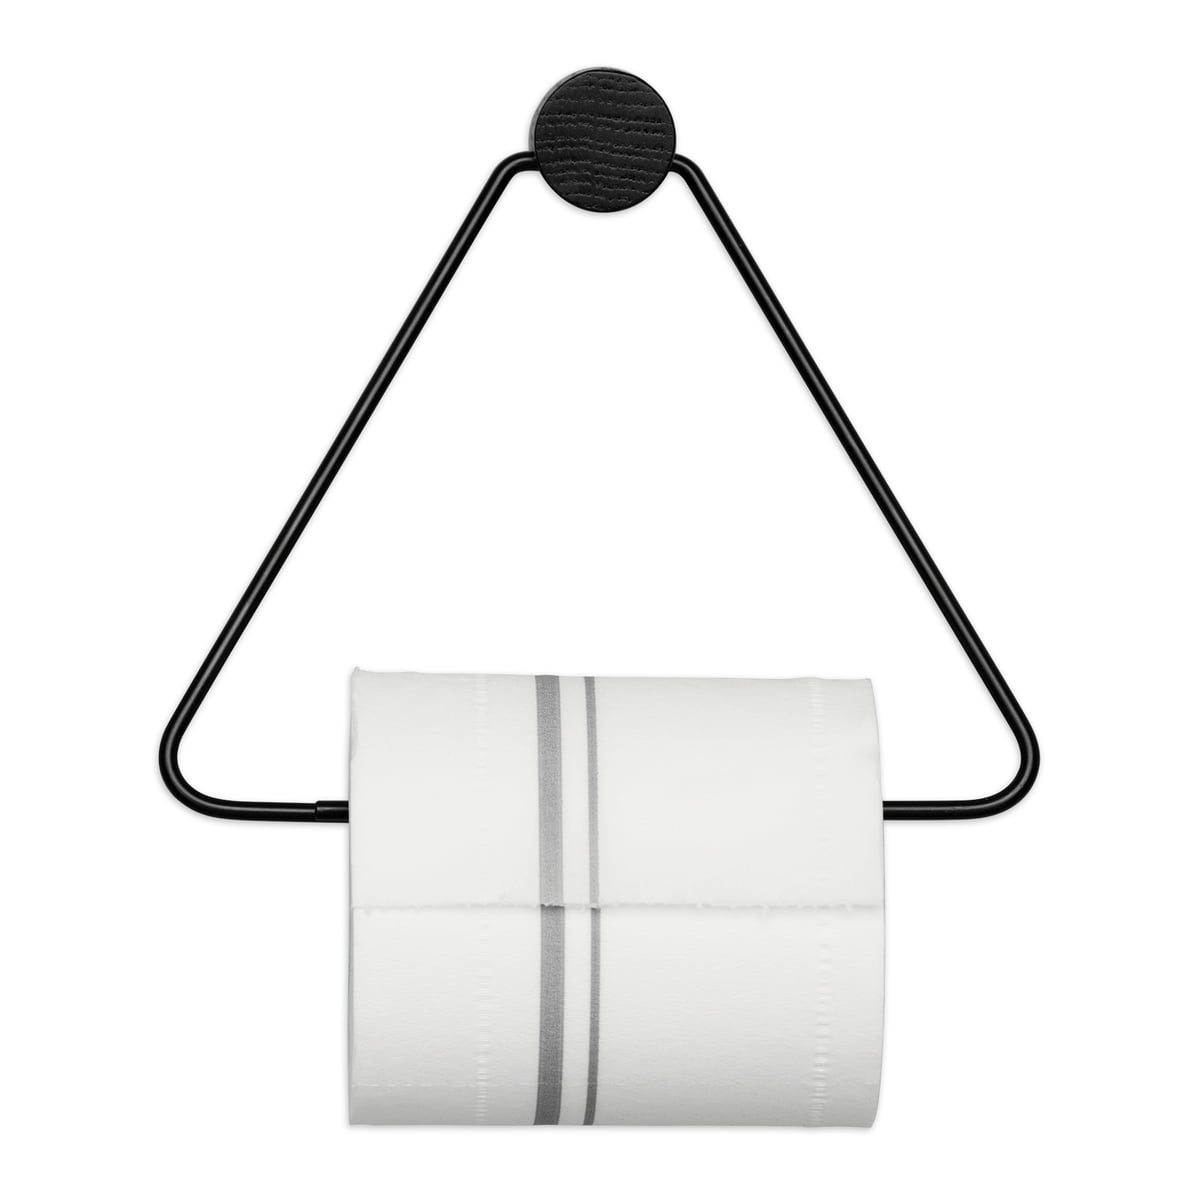 https://cdn.connox.com/m/100030/209079/media/ferm-living/Toilettenpapierhalter/ferm-Living-Toilettenpapierhalter-schwarz-frontal-mit-Toilettenpapierrolle.jpg